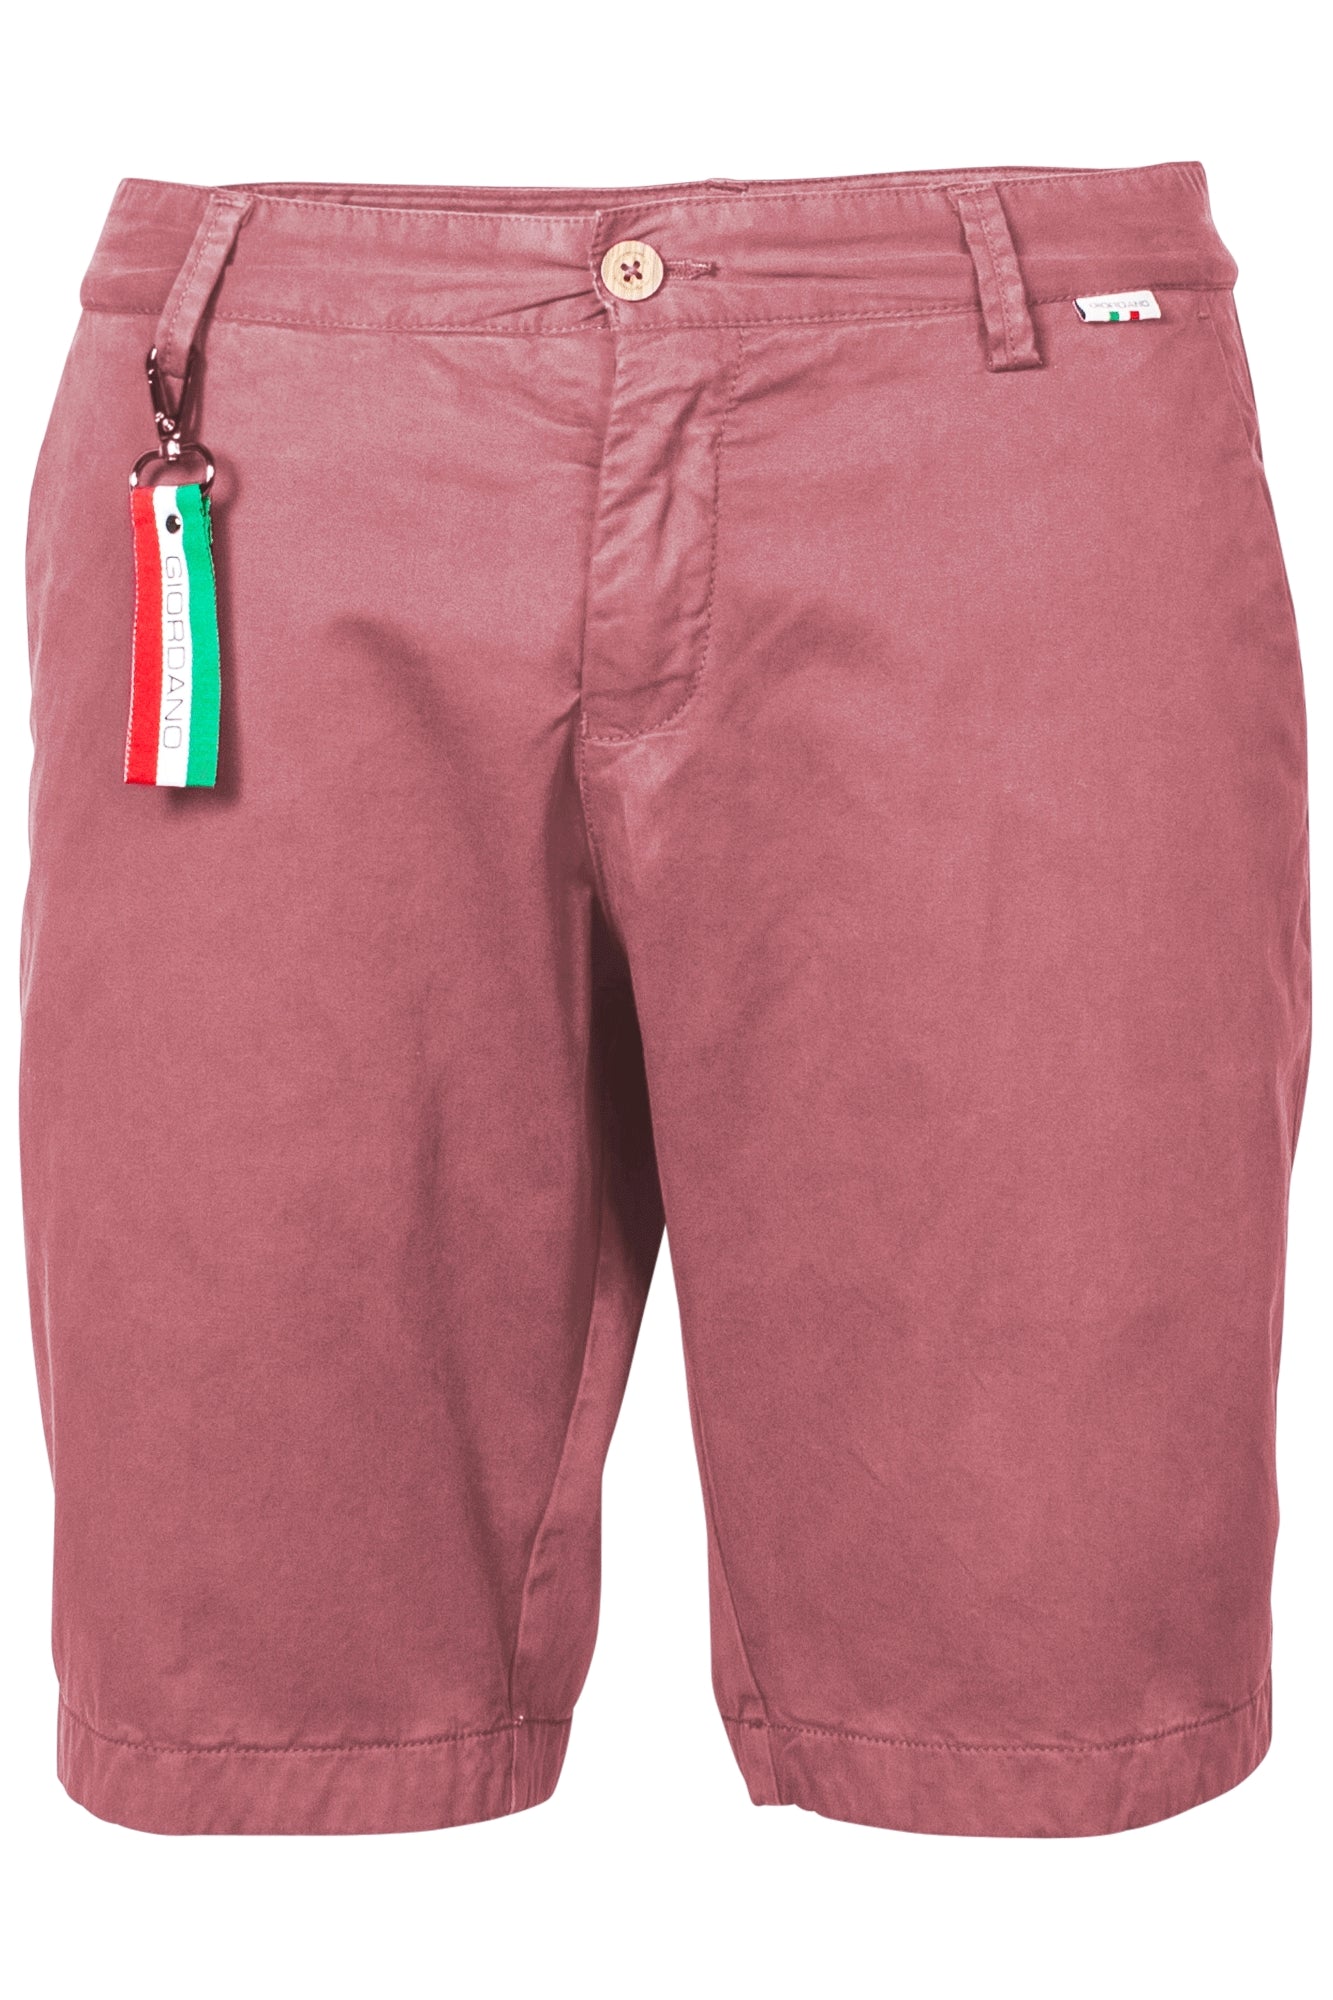 Giordano Dusty Pink Bermuda Shorts